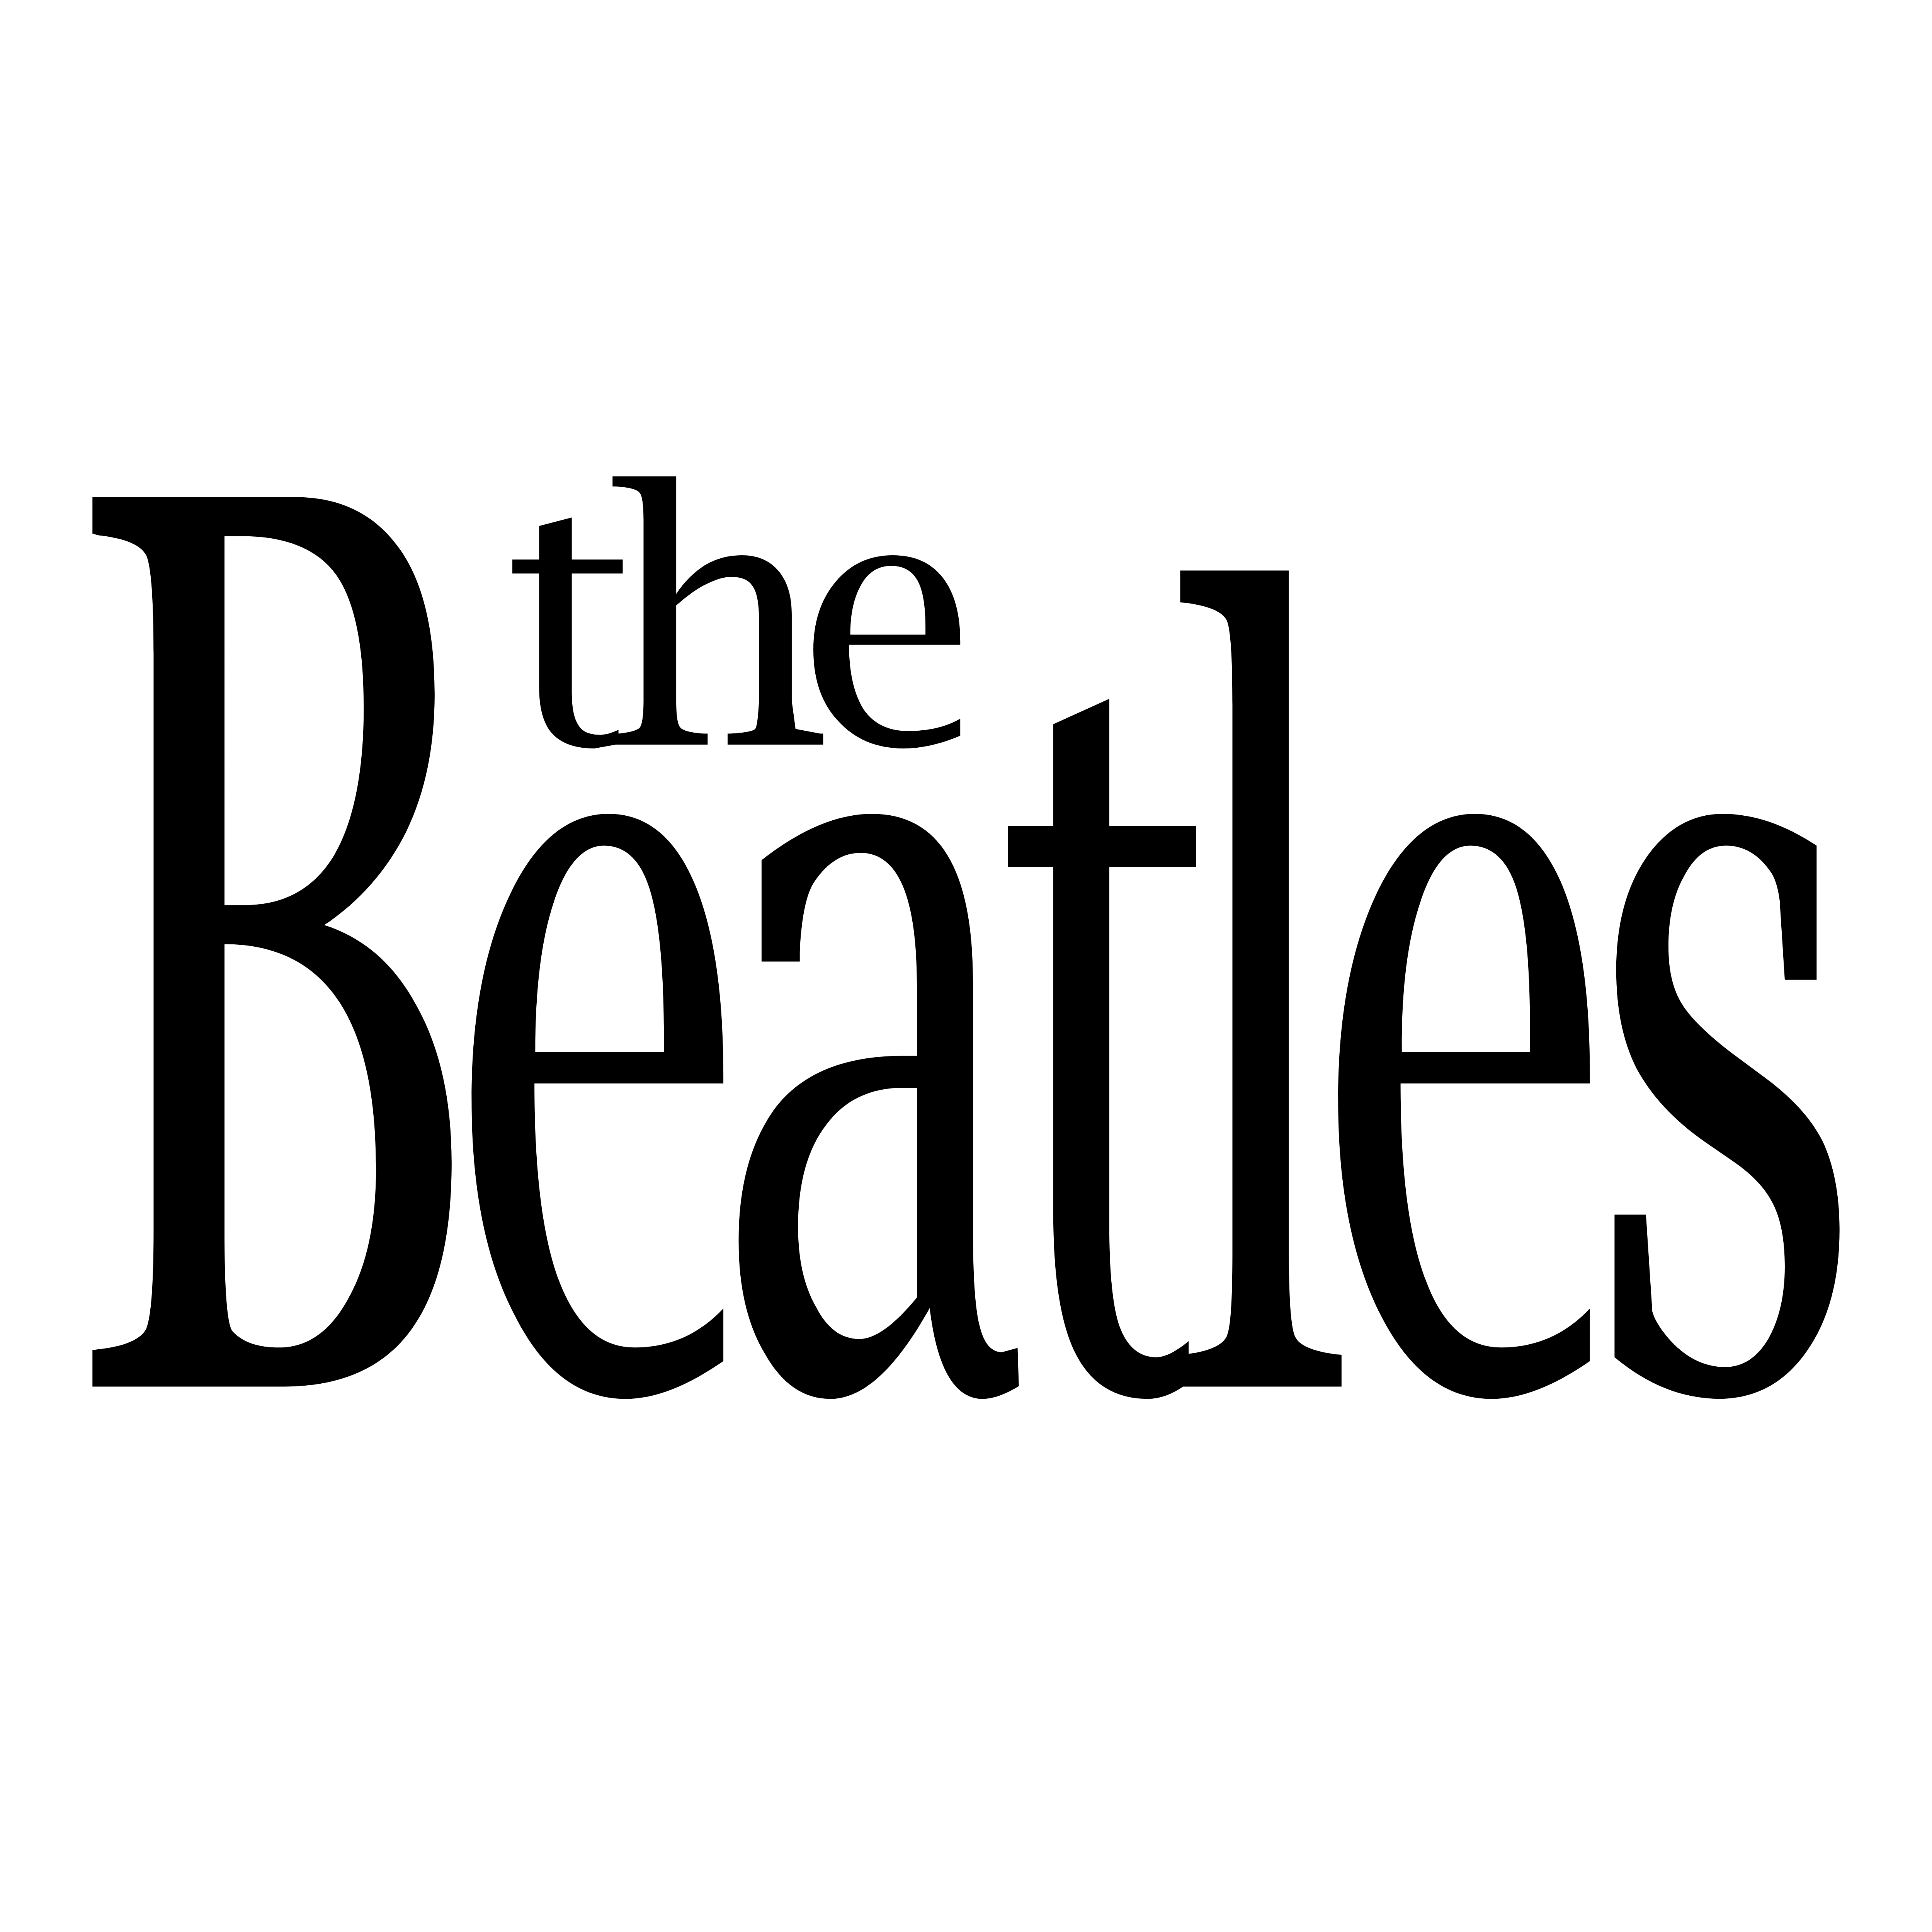 Logo The Beatles Png, Transpa